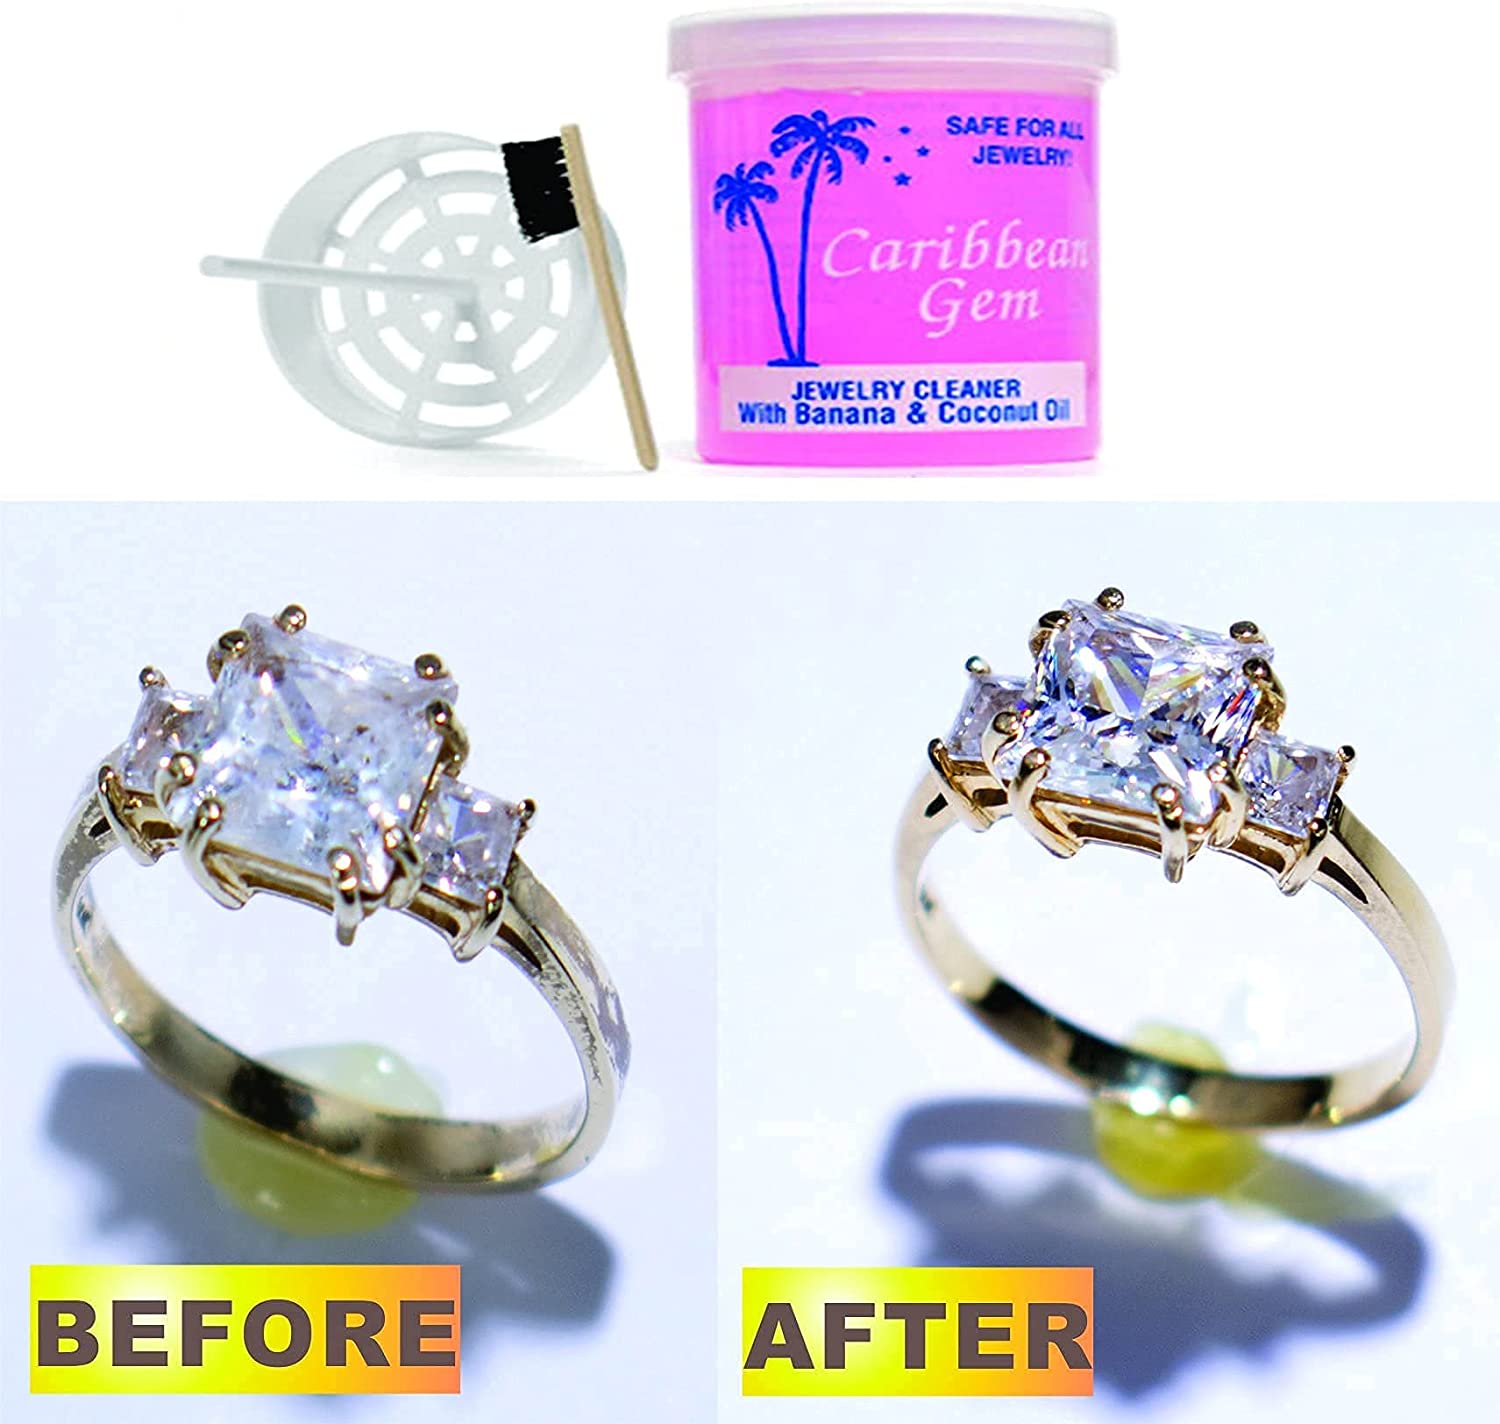  Caribbean Gem All Purpose Jewelry Cleaner Kit w/8oz